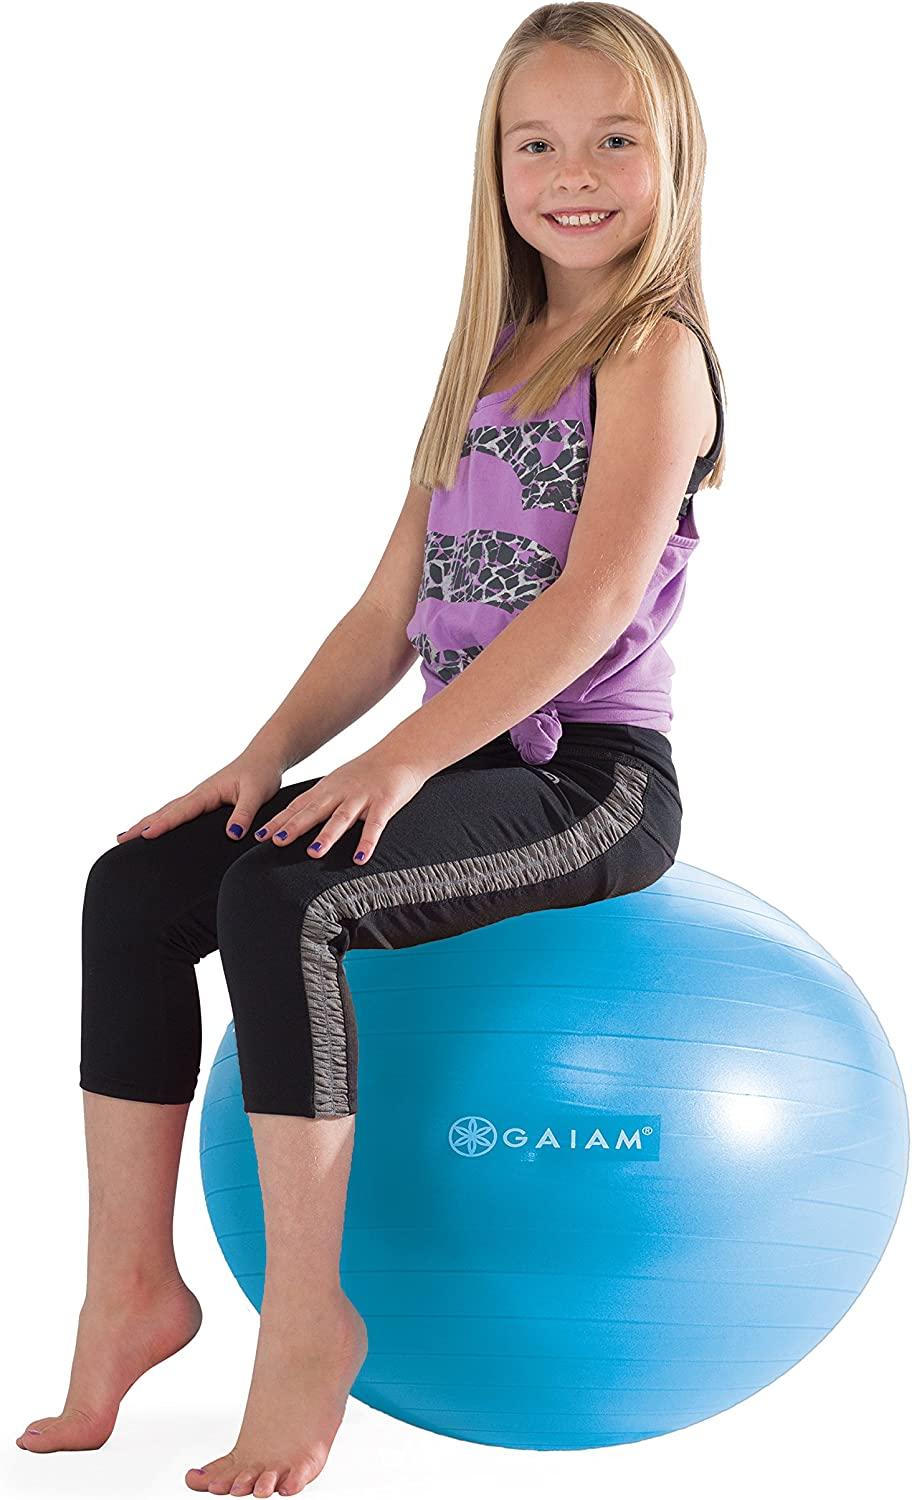 Gaiam Kids Balance Ball - Exercise Stability Yoga Ball, Kids